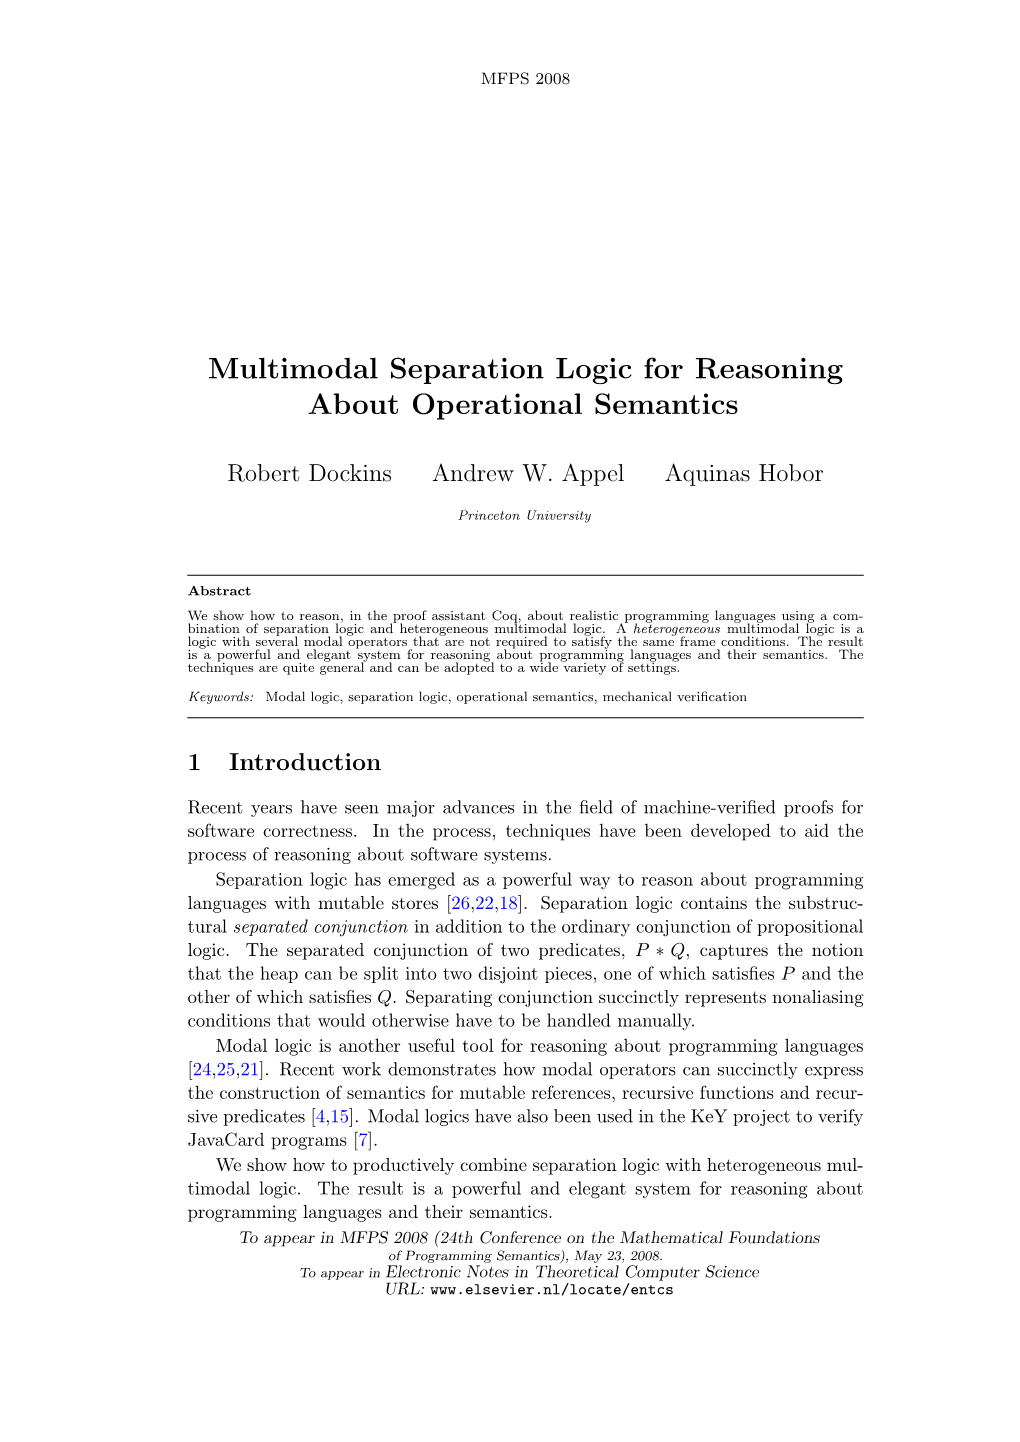 Multimodal Separation Logic for Reasoning About Operational Semantics